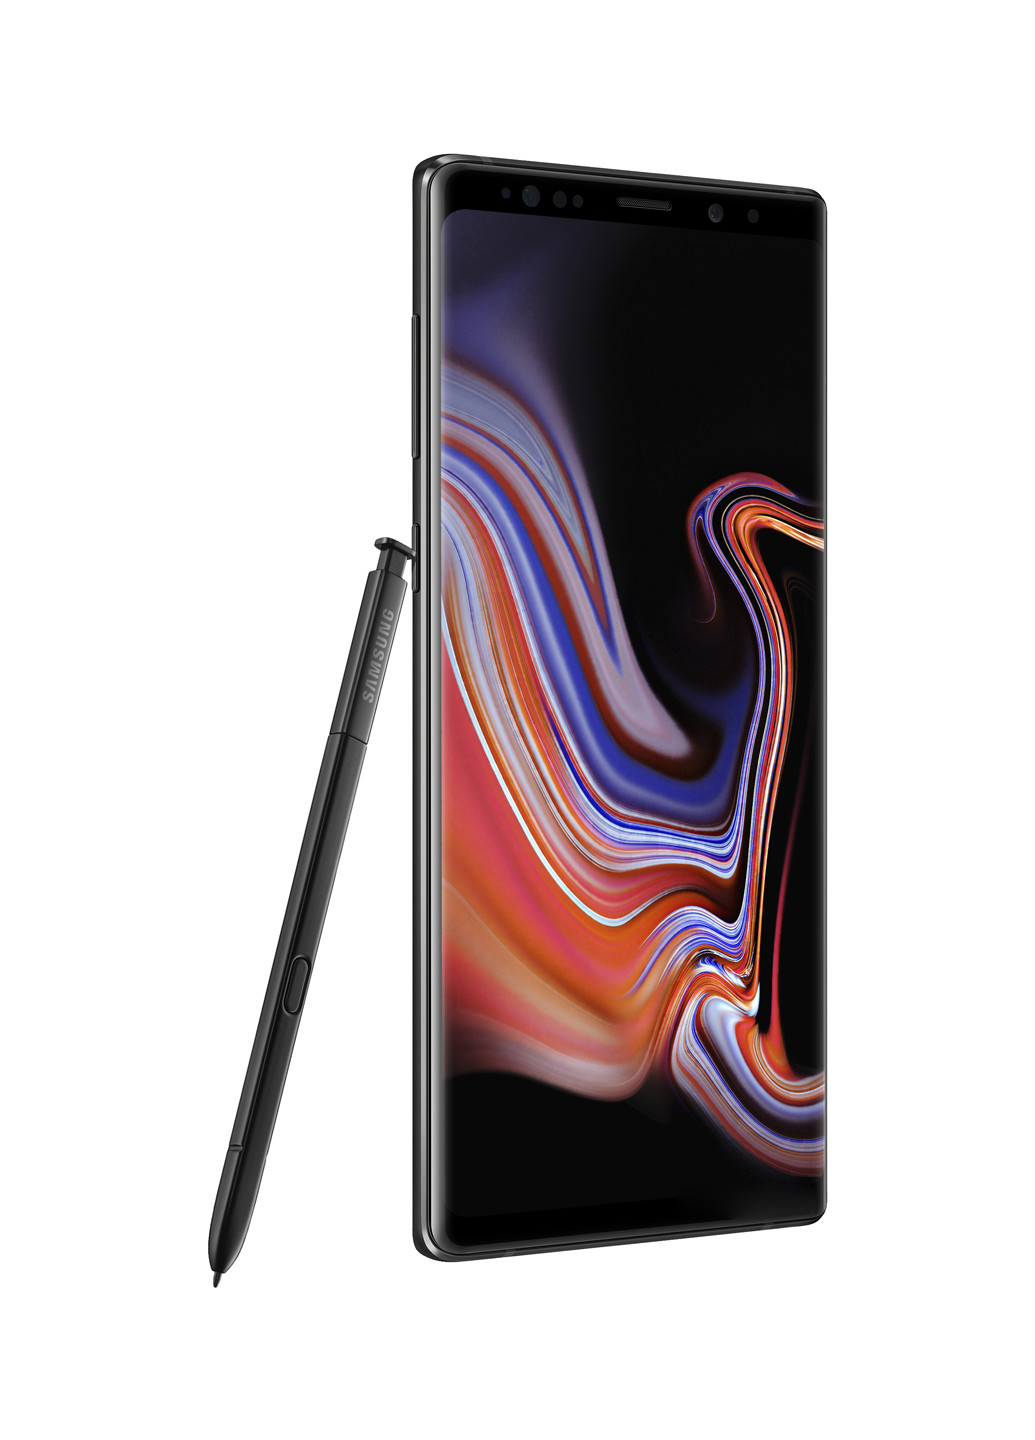 Смартфон Samsung Galaxy Note 9 6/128Gb Black (SM-N960FZKDSEK) чёрный